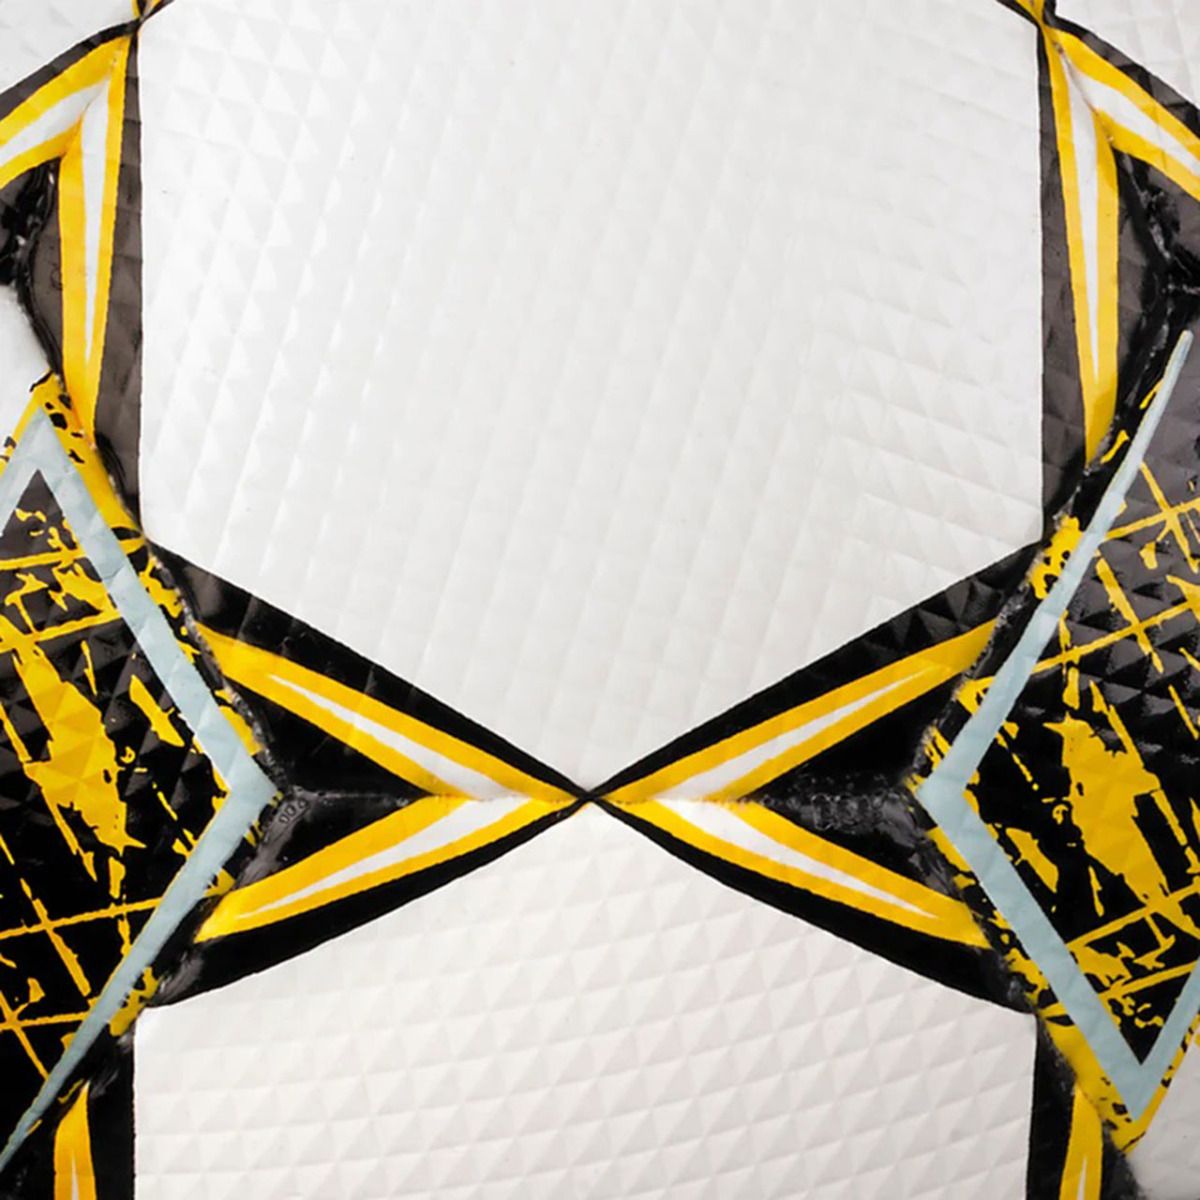 Select Fotbalový míč Numero 10 FIFA Basic v23 18325